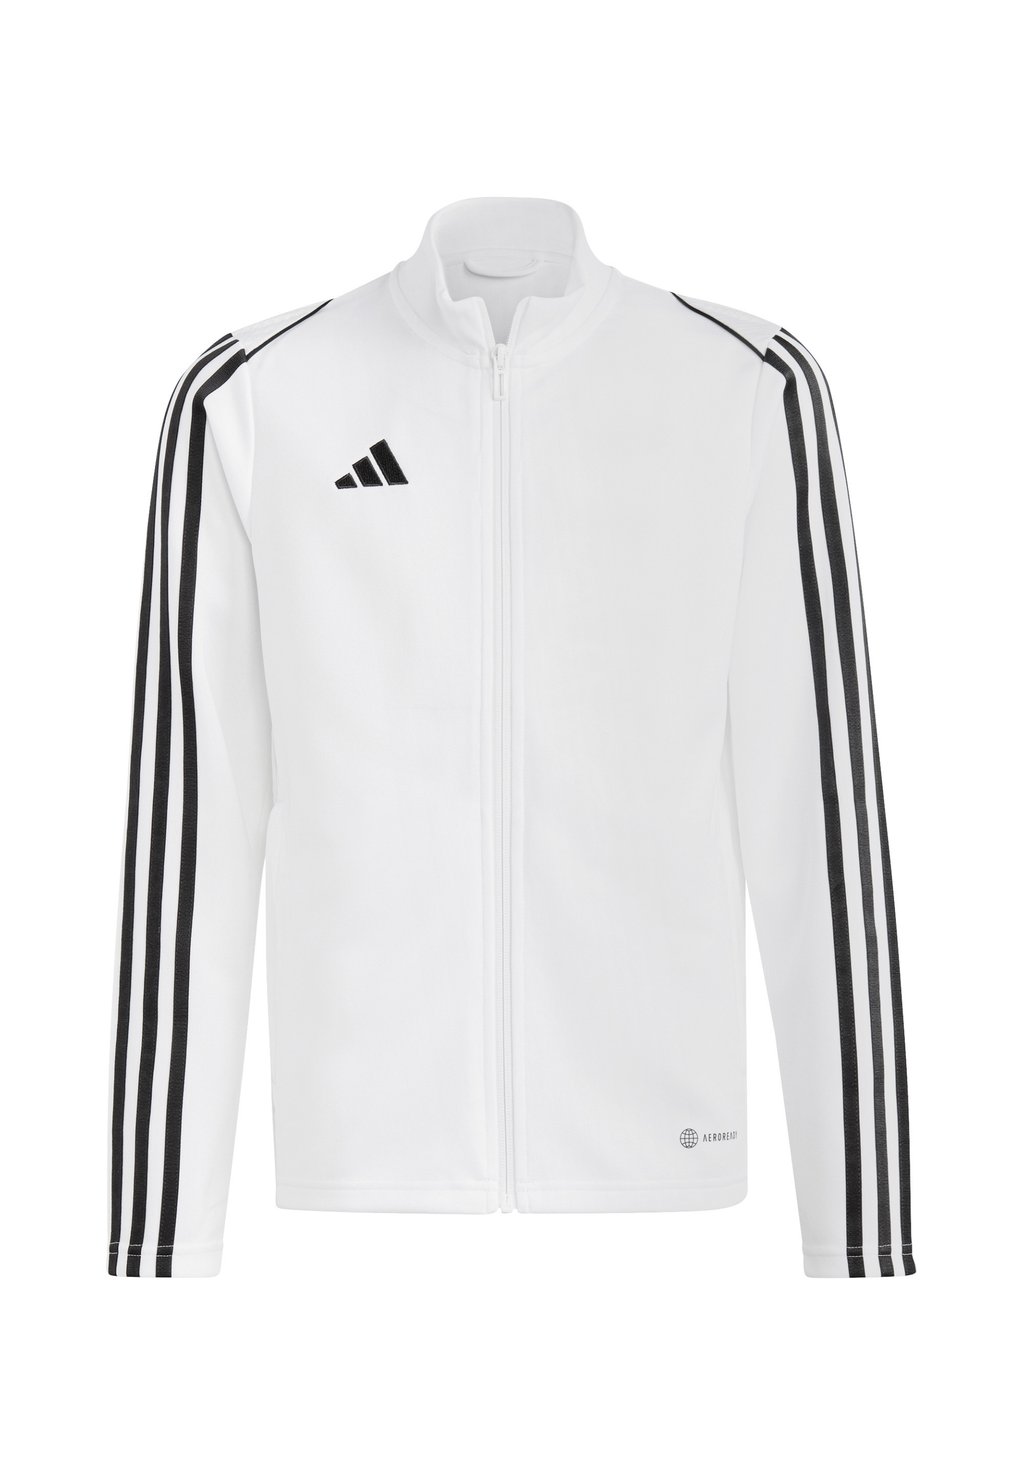 Спортивная куртка Tiro 23 League Track Adidas, цвет weiss спортивная куртка tiro 23 league adidas цвет gelb